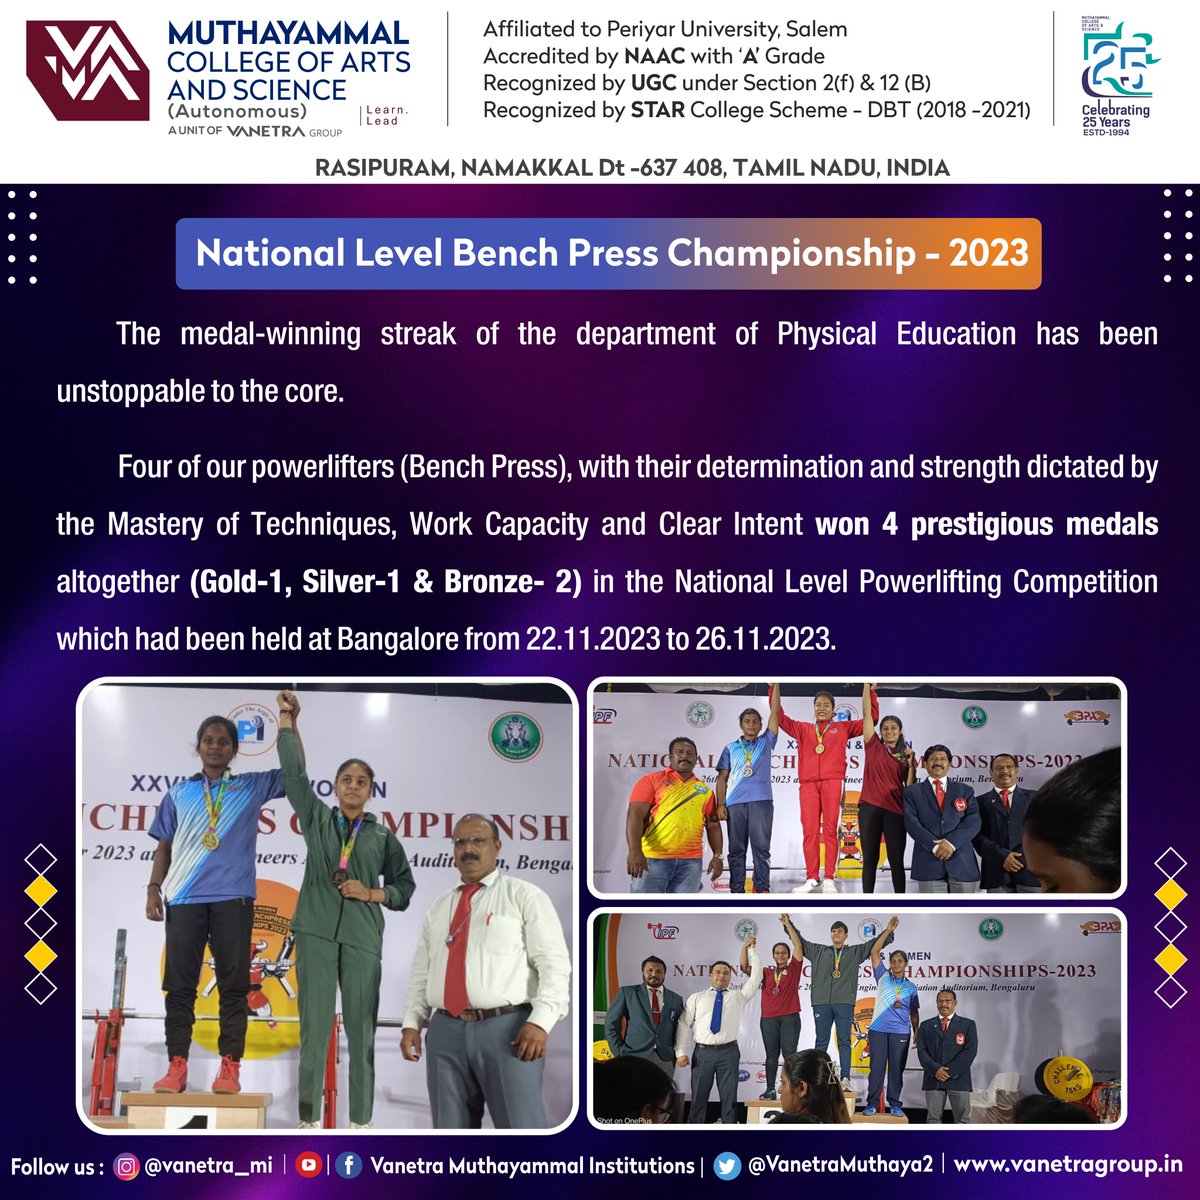 #nationallevel #powerlifting #powerliftingwomen #POWERLIFTINGchampion #powerliftingchampions #powerliftingchampionship #medals #MCAS